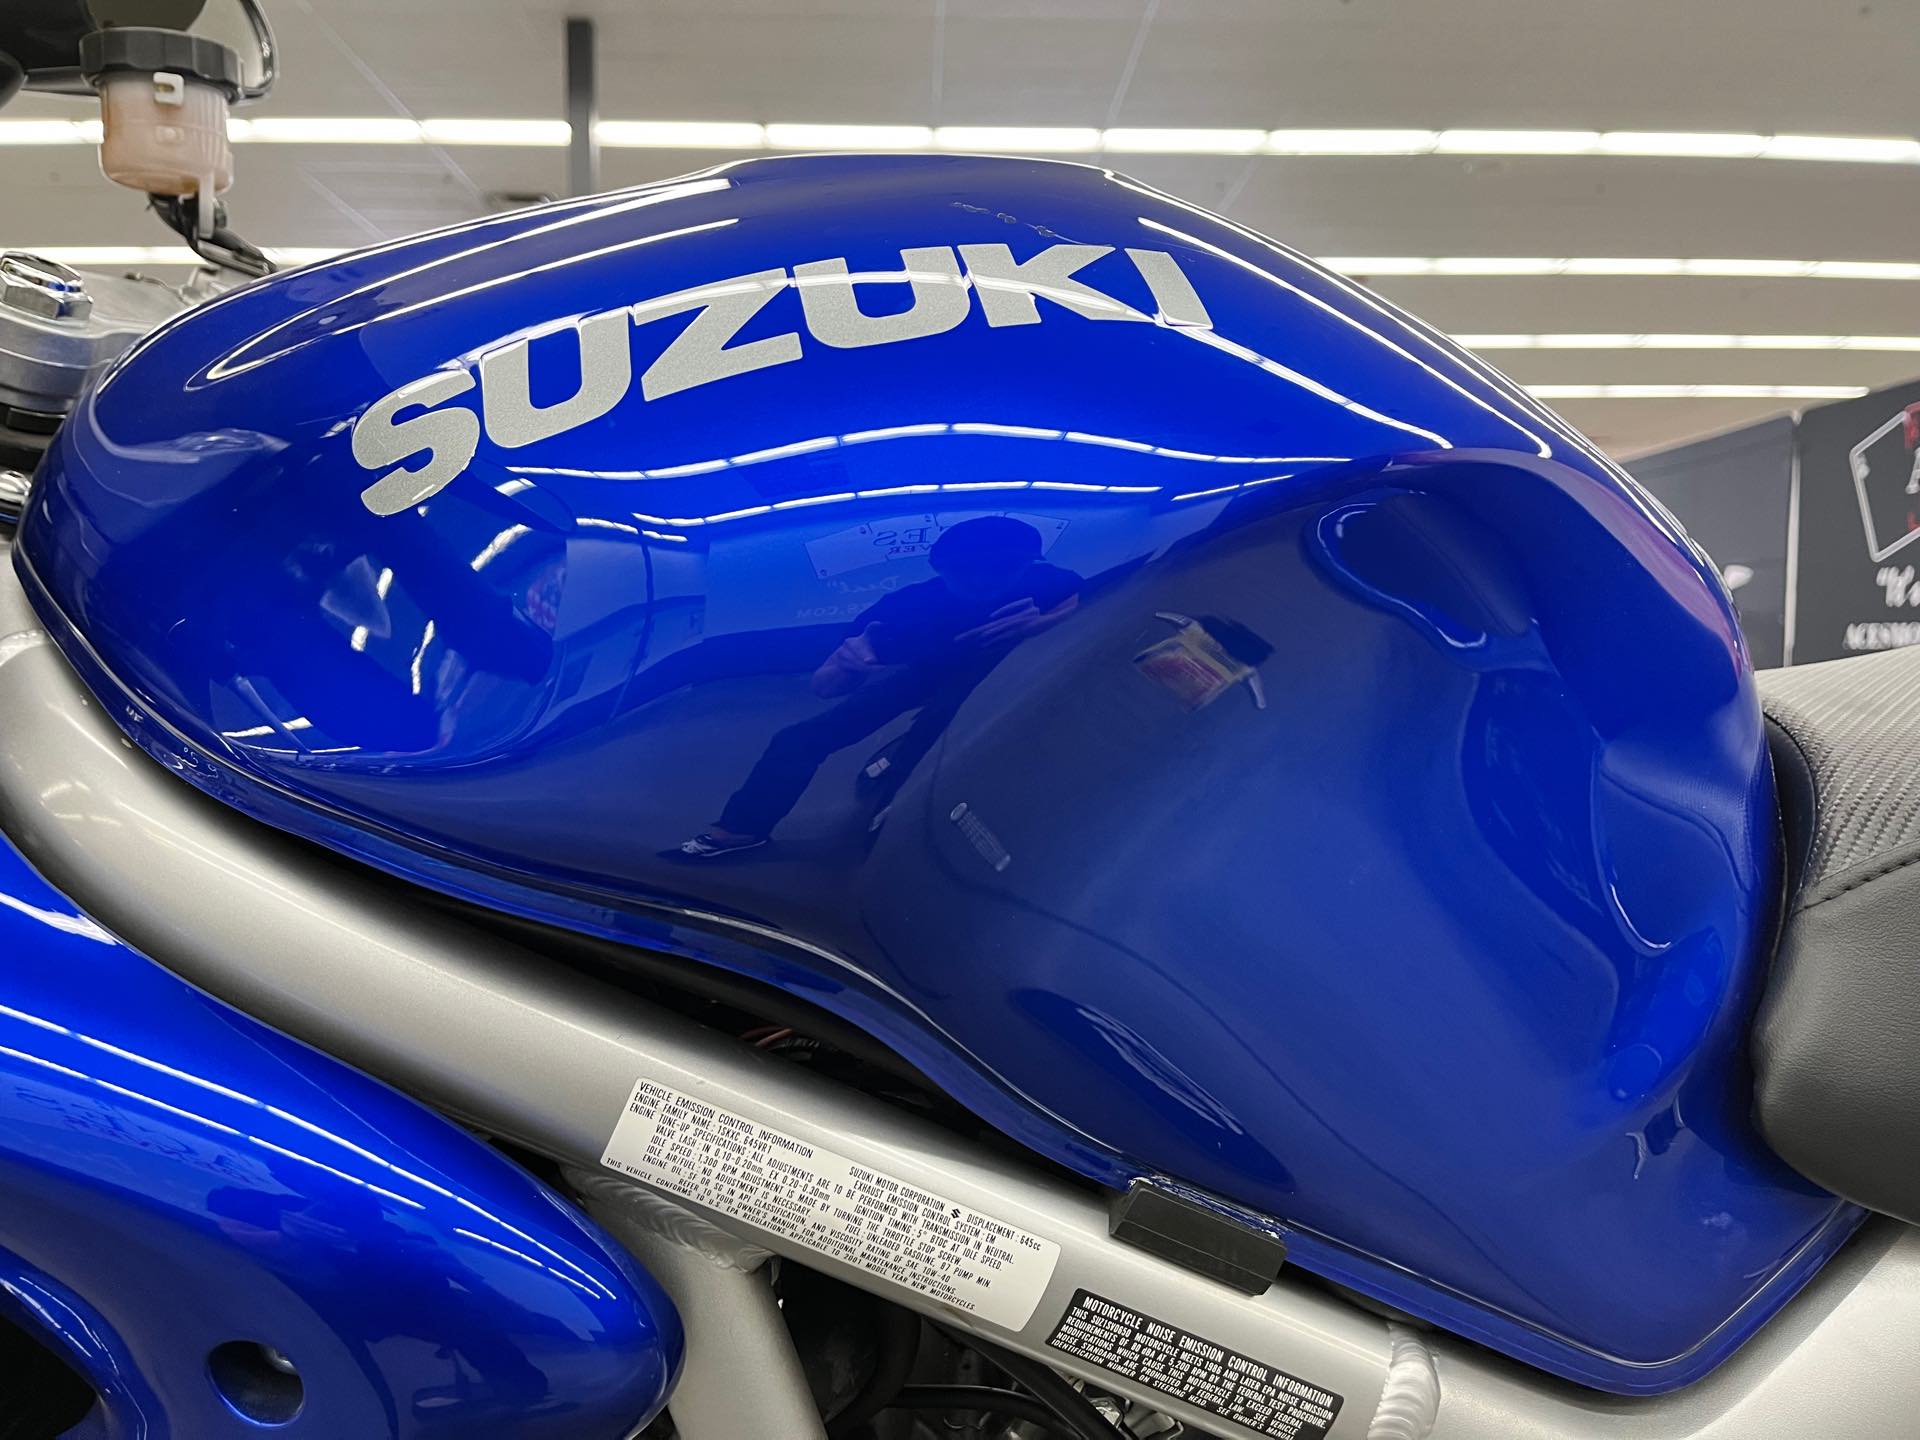 2001 SUZUKI SV650SK1 at Aces Motorcycles - Denver